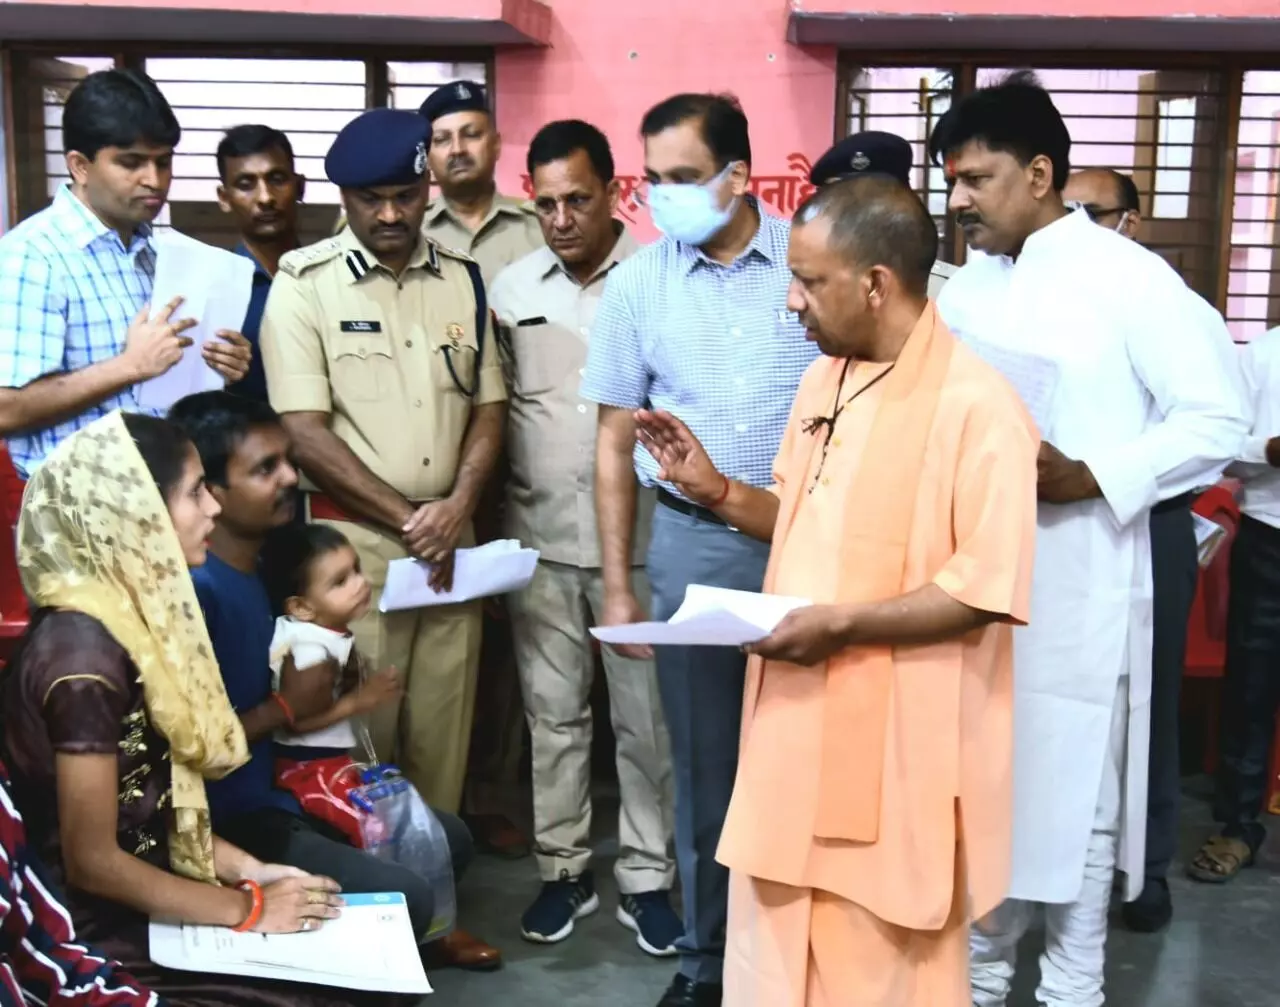 Chief Minister Yogi Adityanath held Janta Darbar at Gorakhnath temple in Gorakhpur